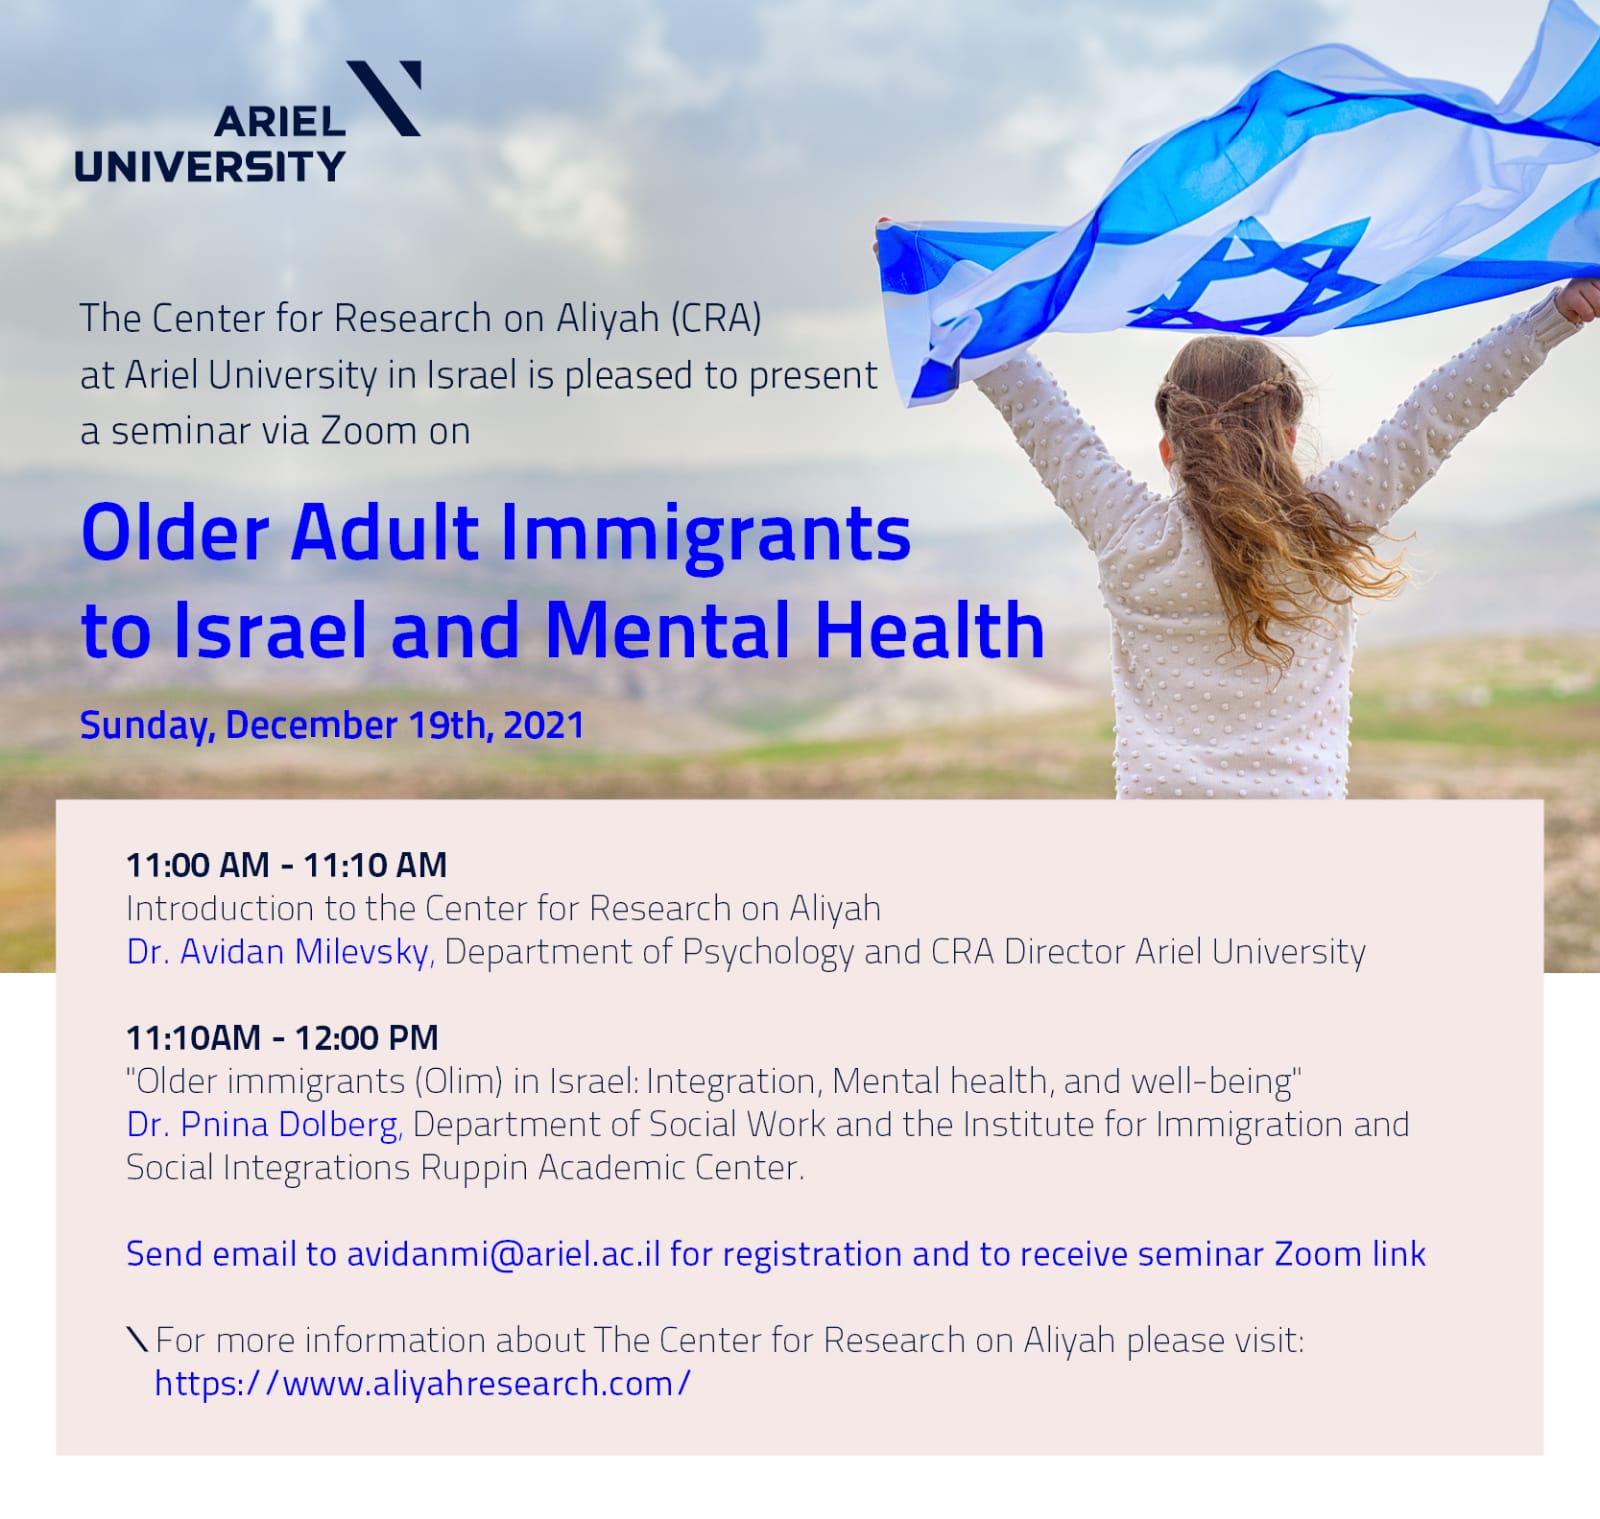 Older Adult Immigrants Mental Health seminar